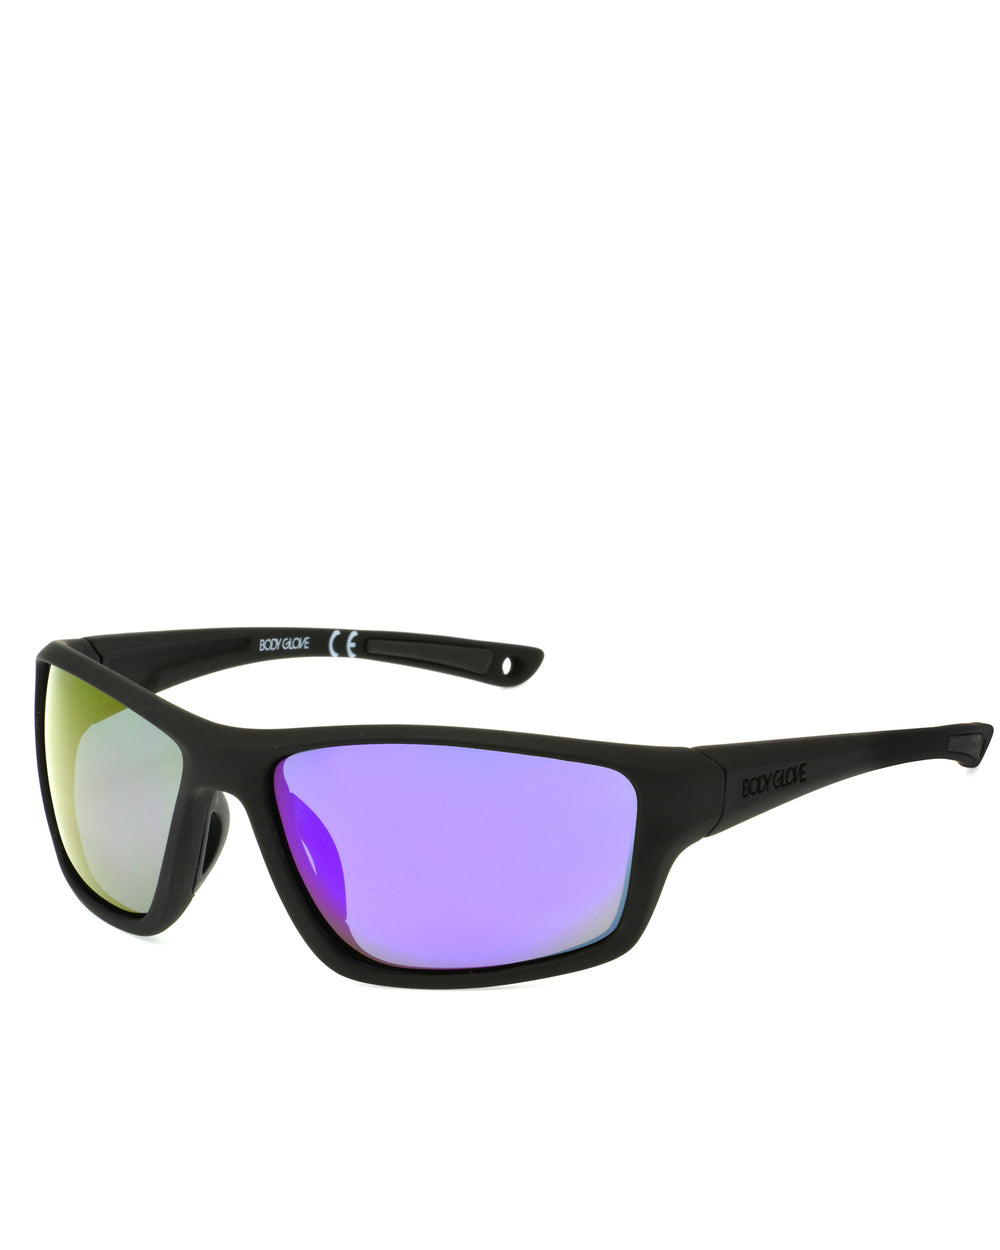 Men's FL21 Floating Polarized Sunglasses - Black